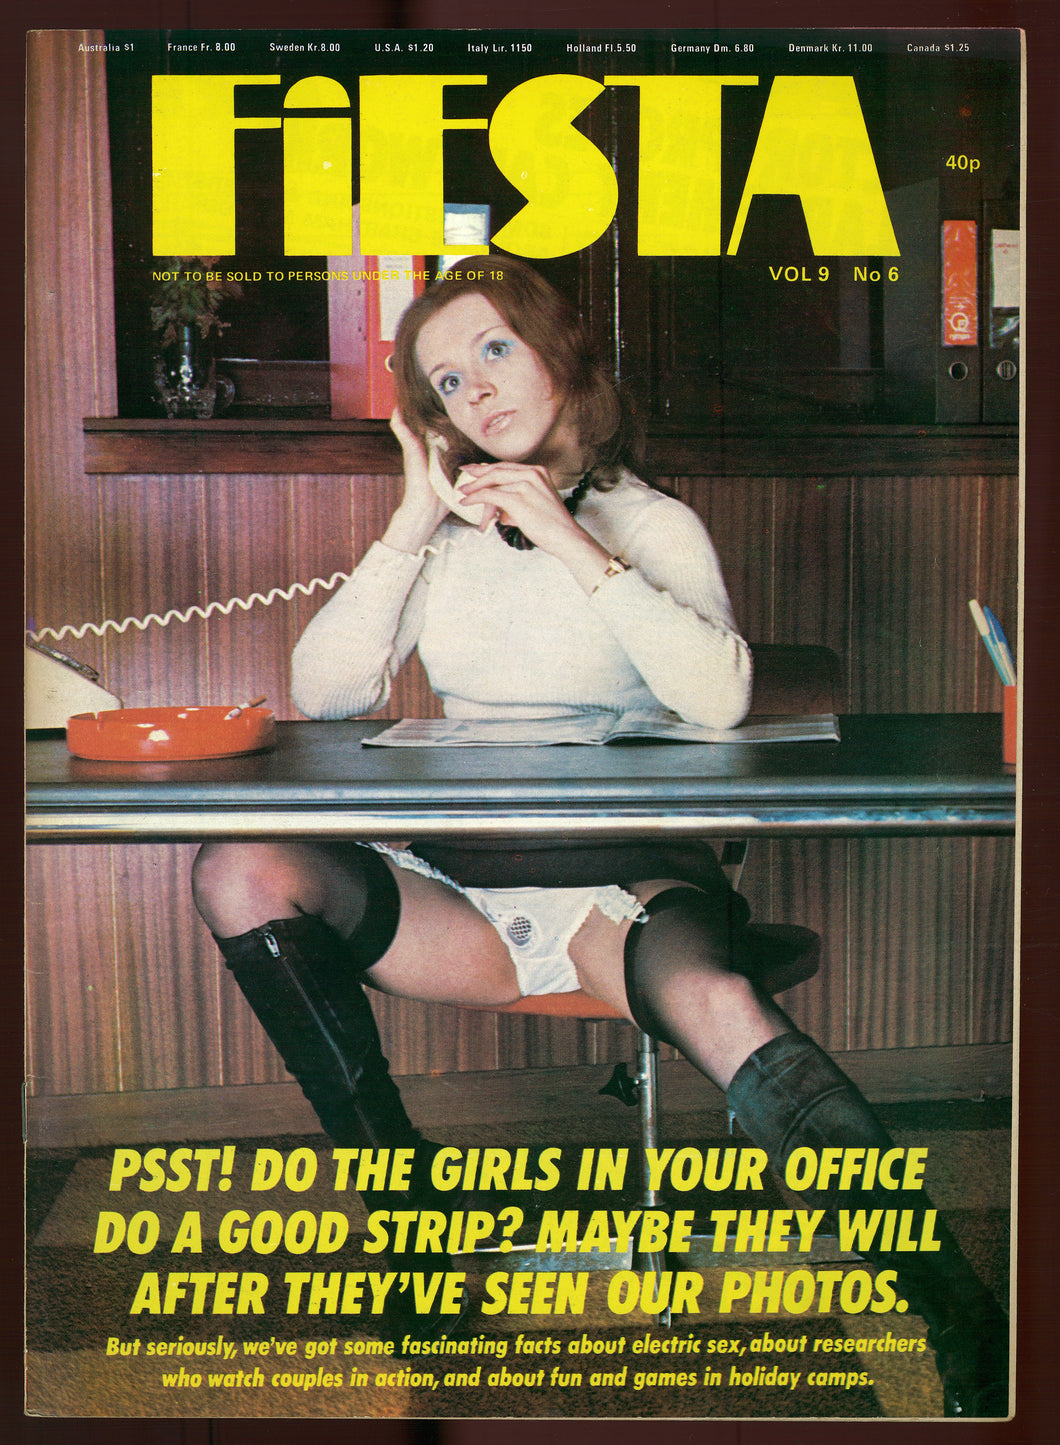 Fiesta Vol 9 No 6 1975